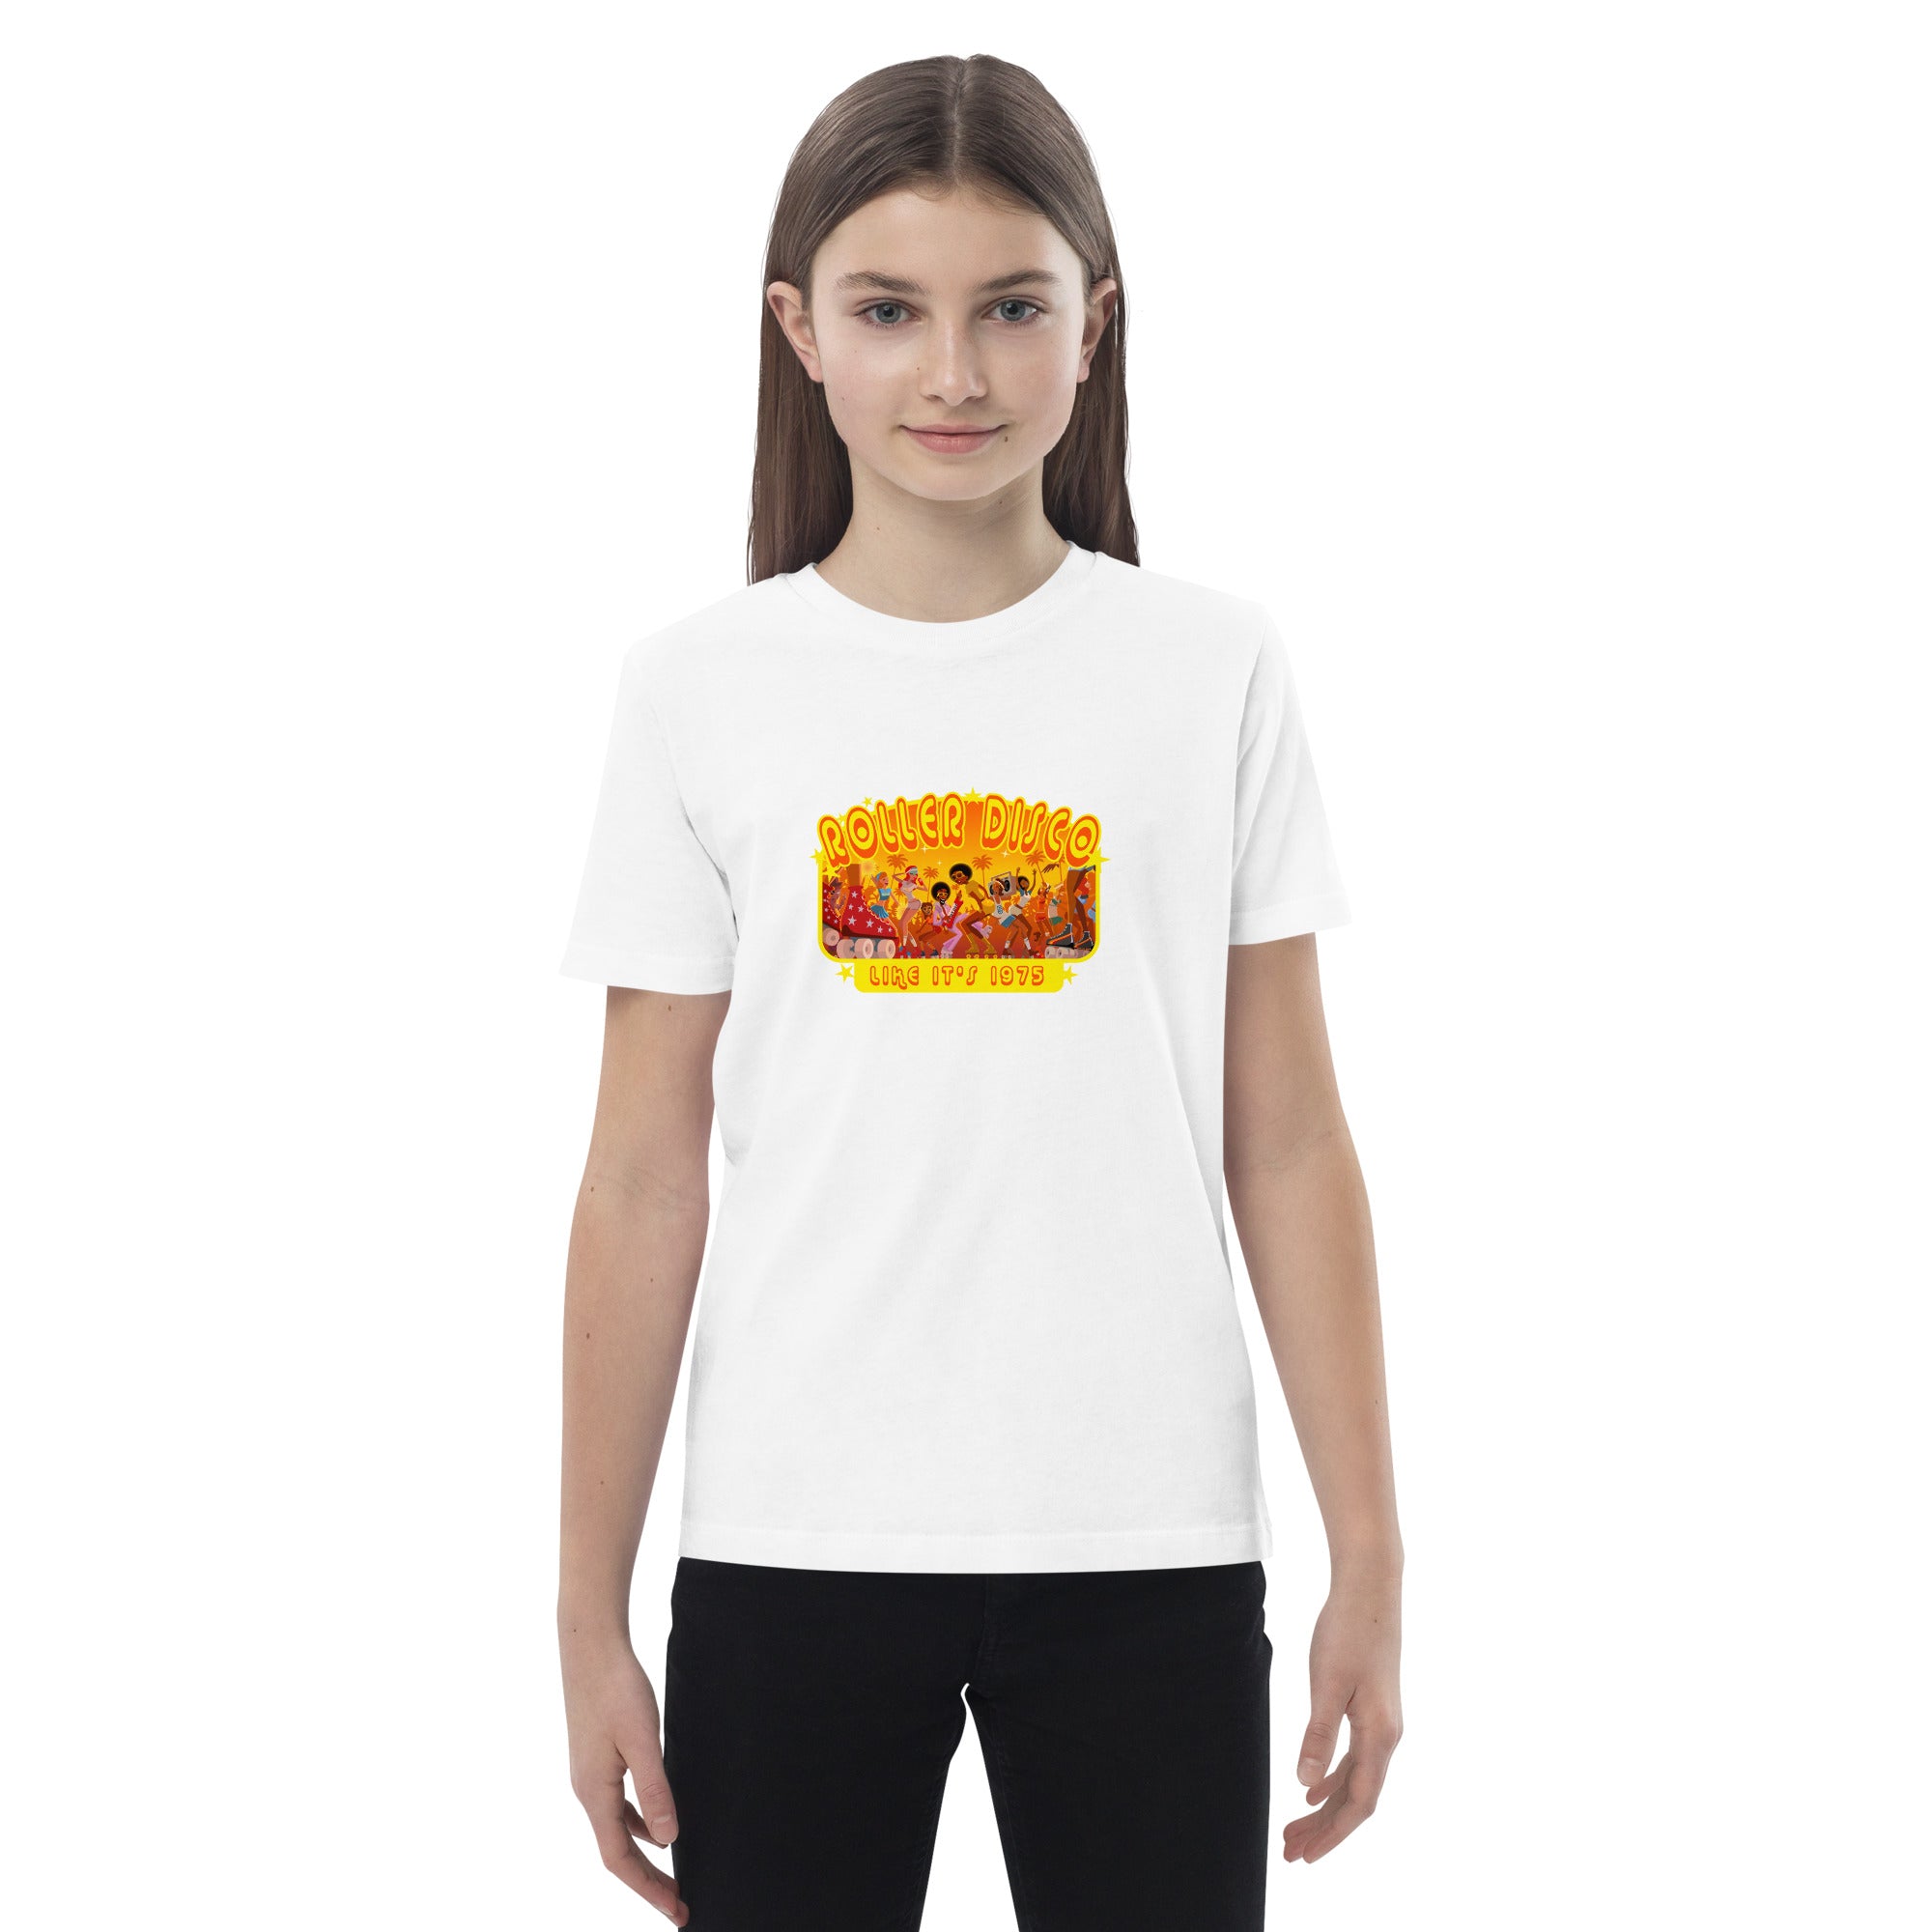 T-shirt en coton bio enfant Roller Disco 1975